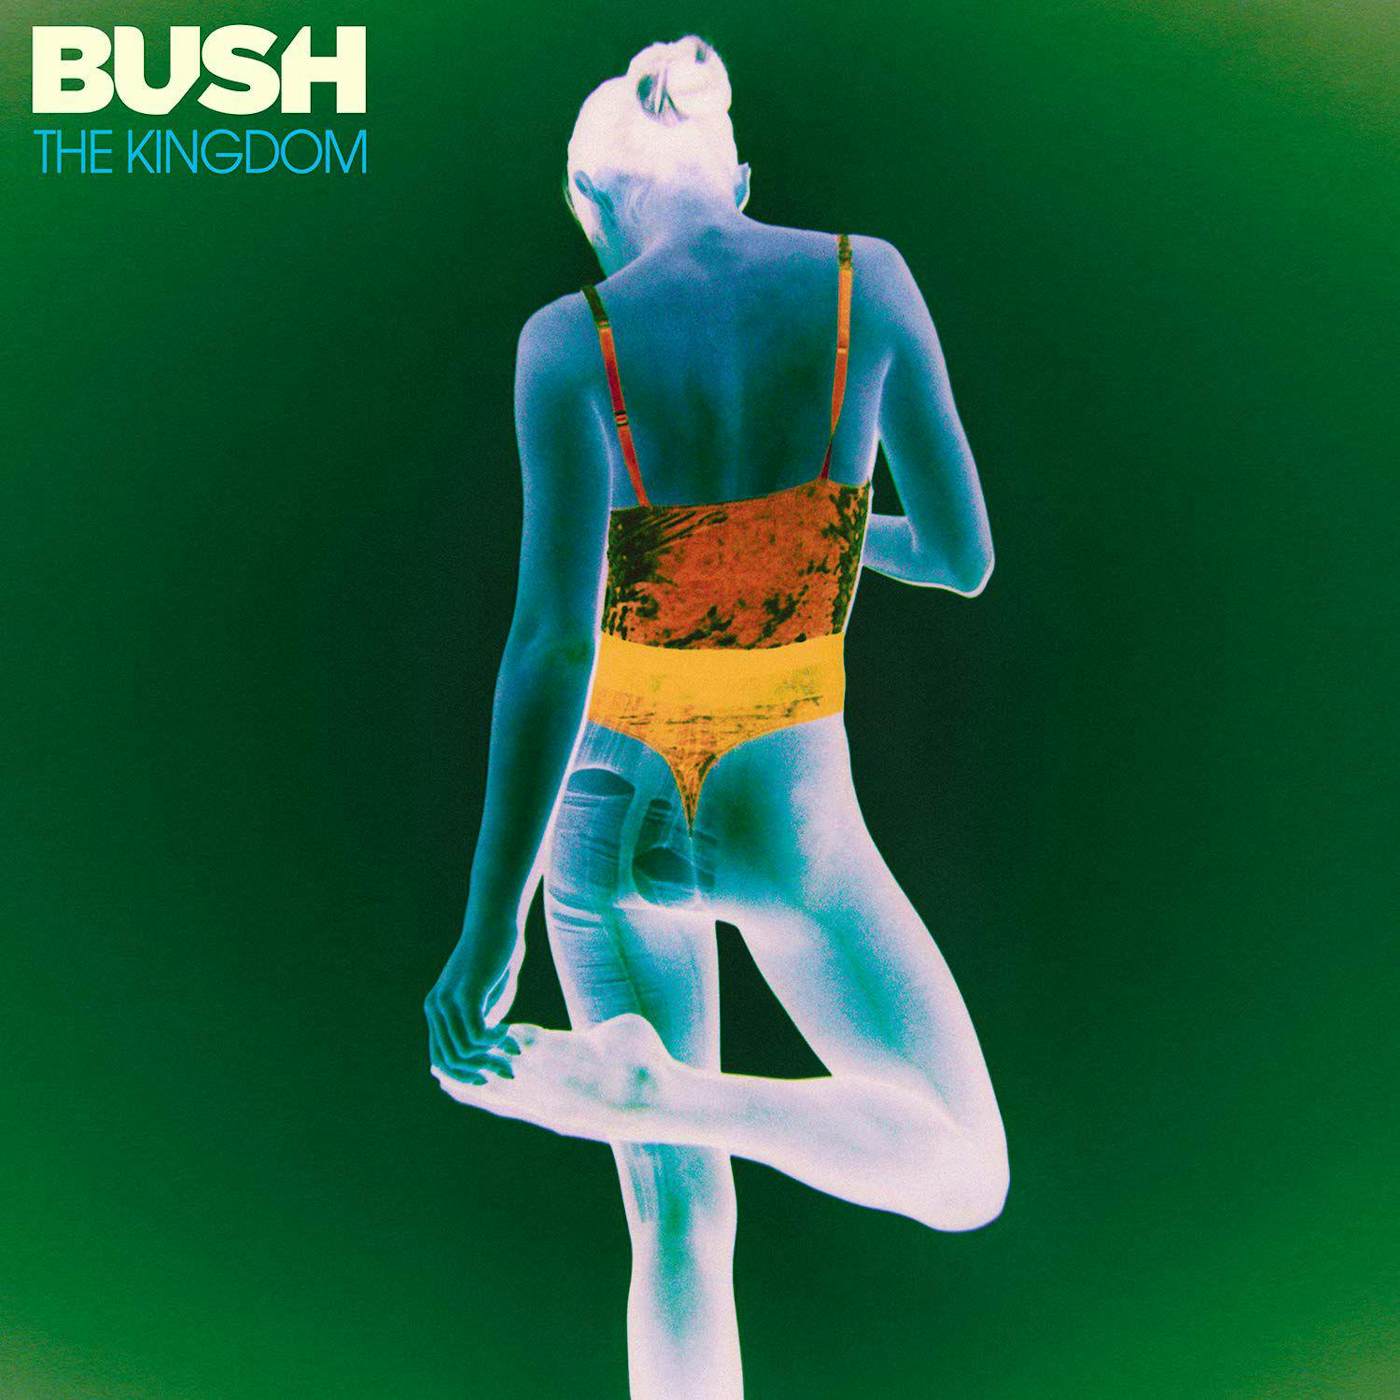 Bush The Kingdom Vinyl Record